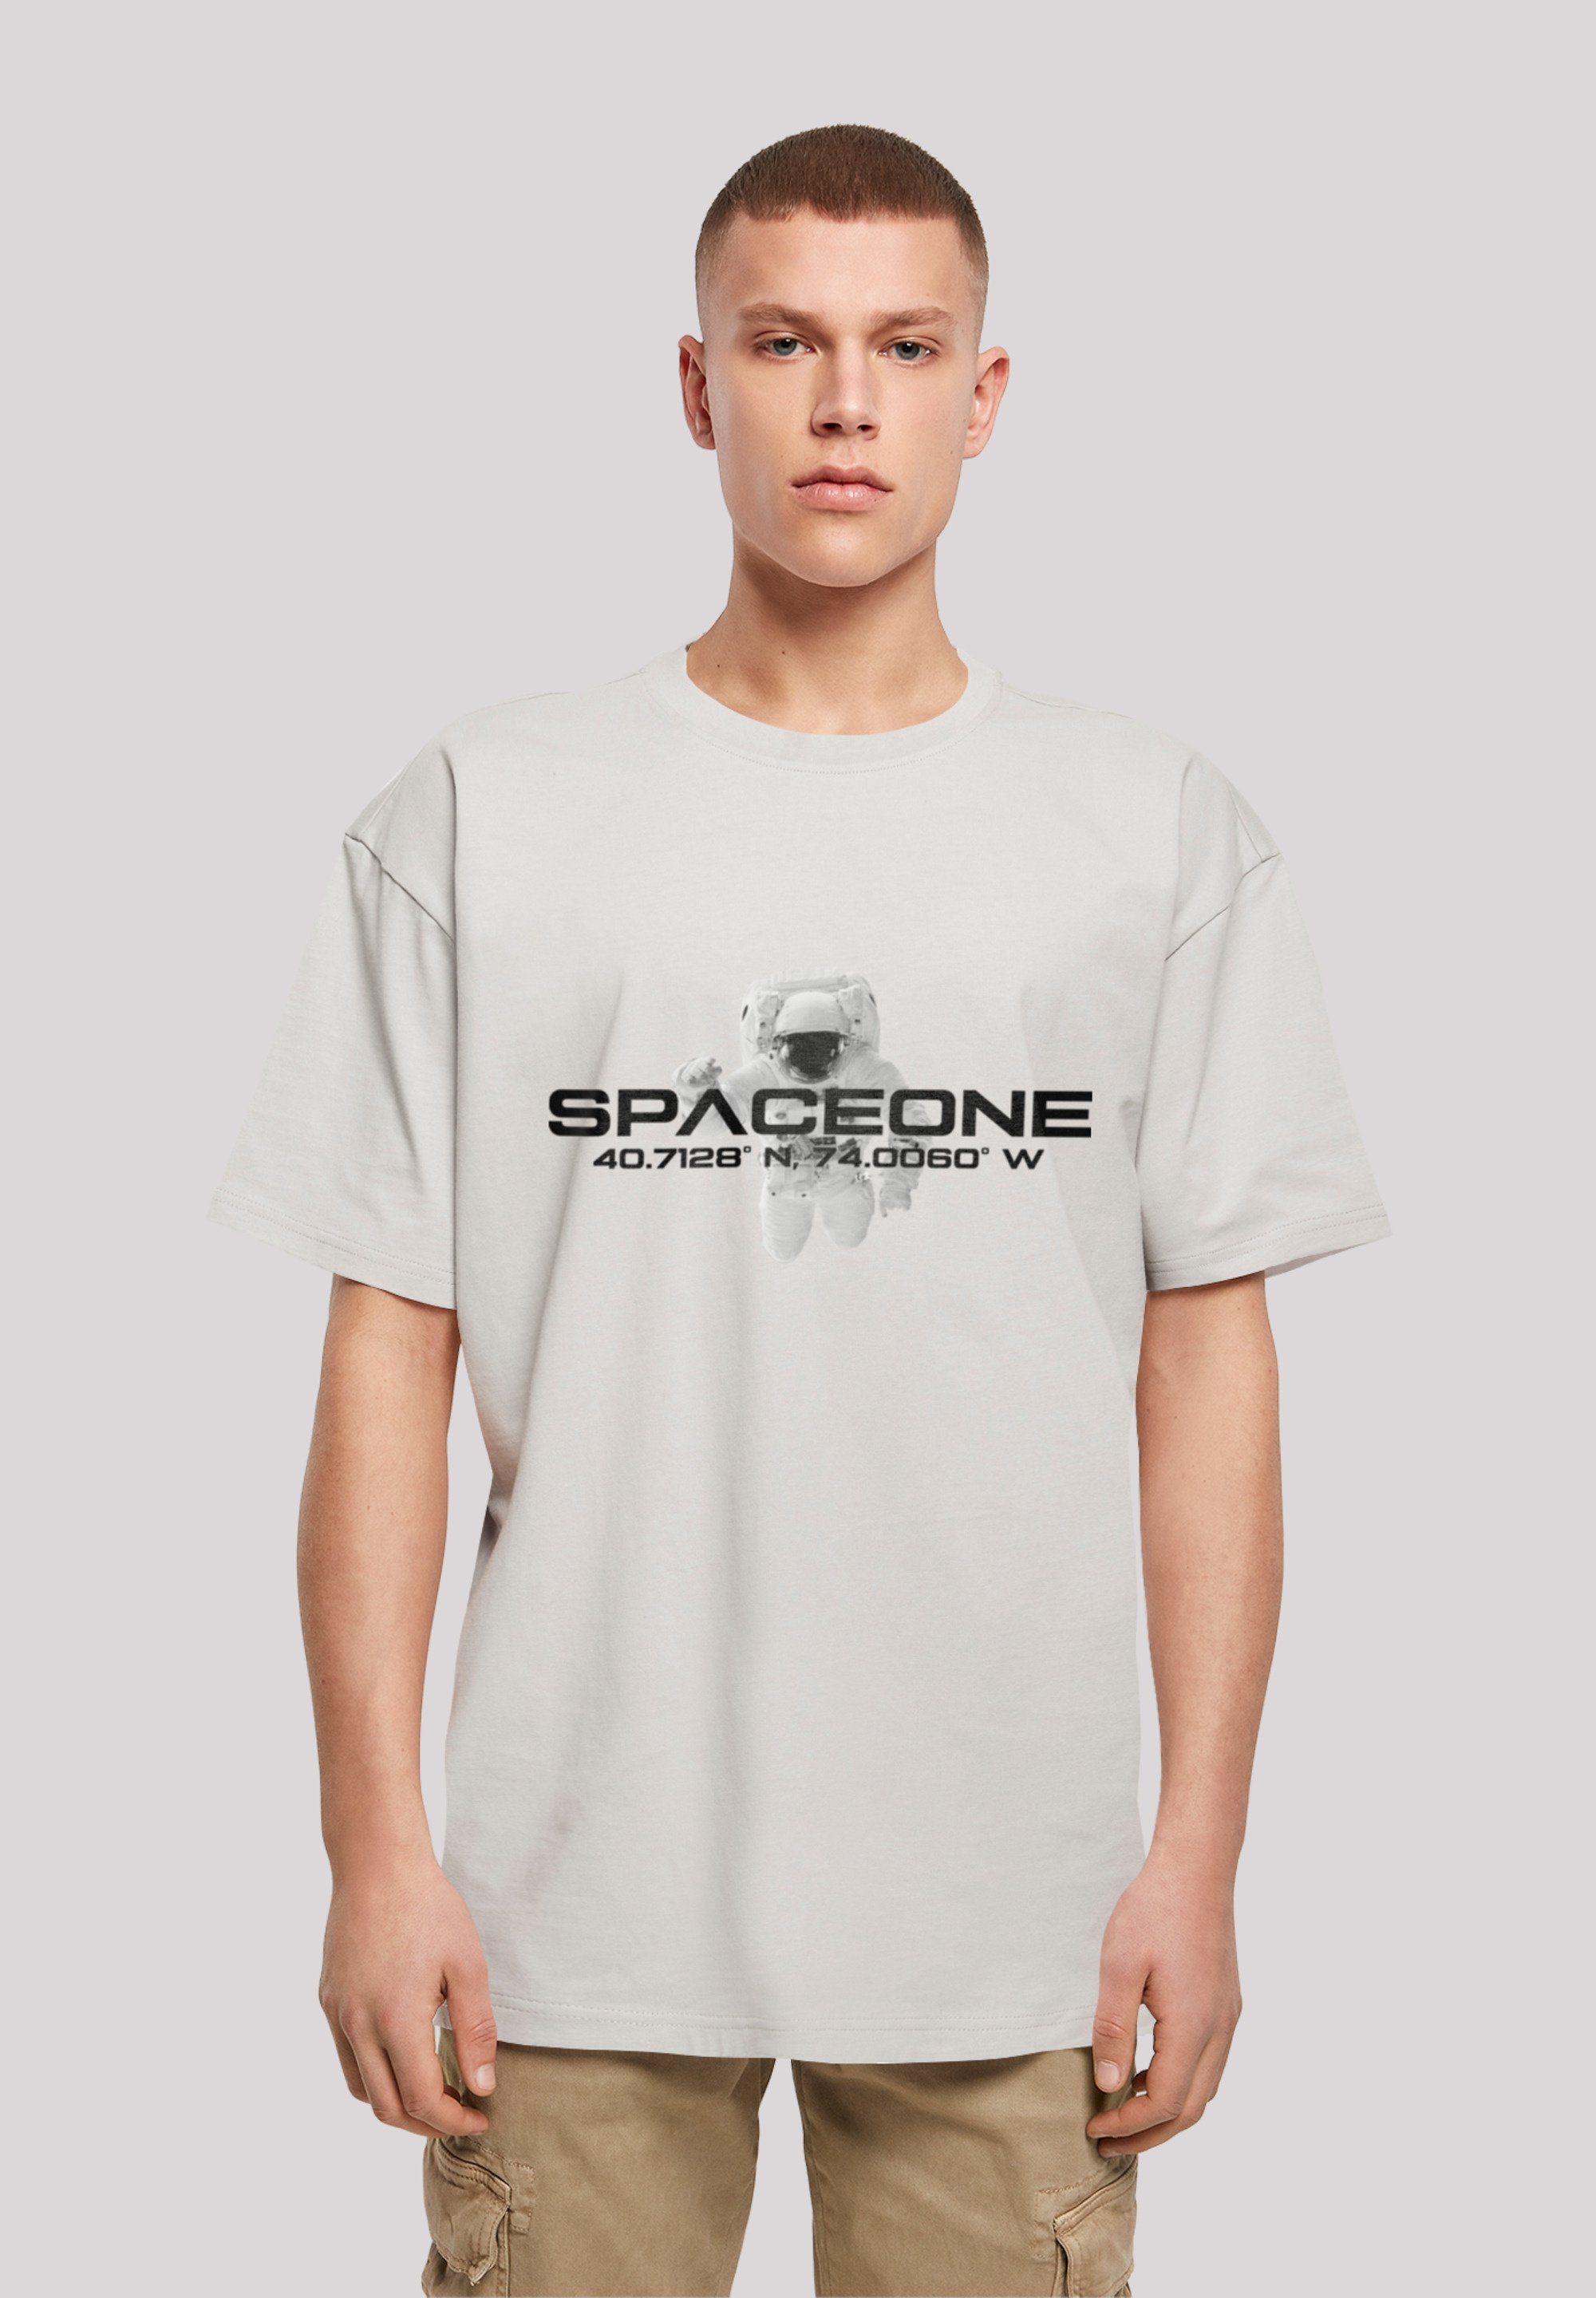 F4NT4STIC T-Shirt PHIBER SpaceOne Astronaut Print lightasphalt